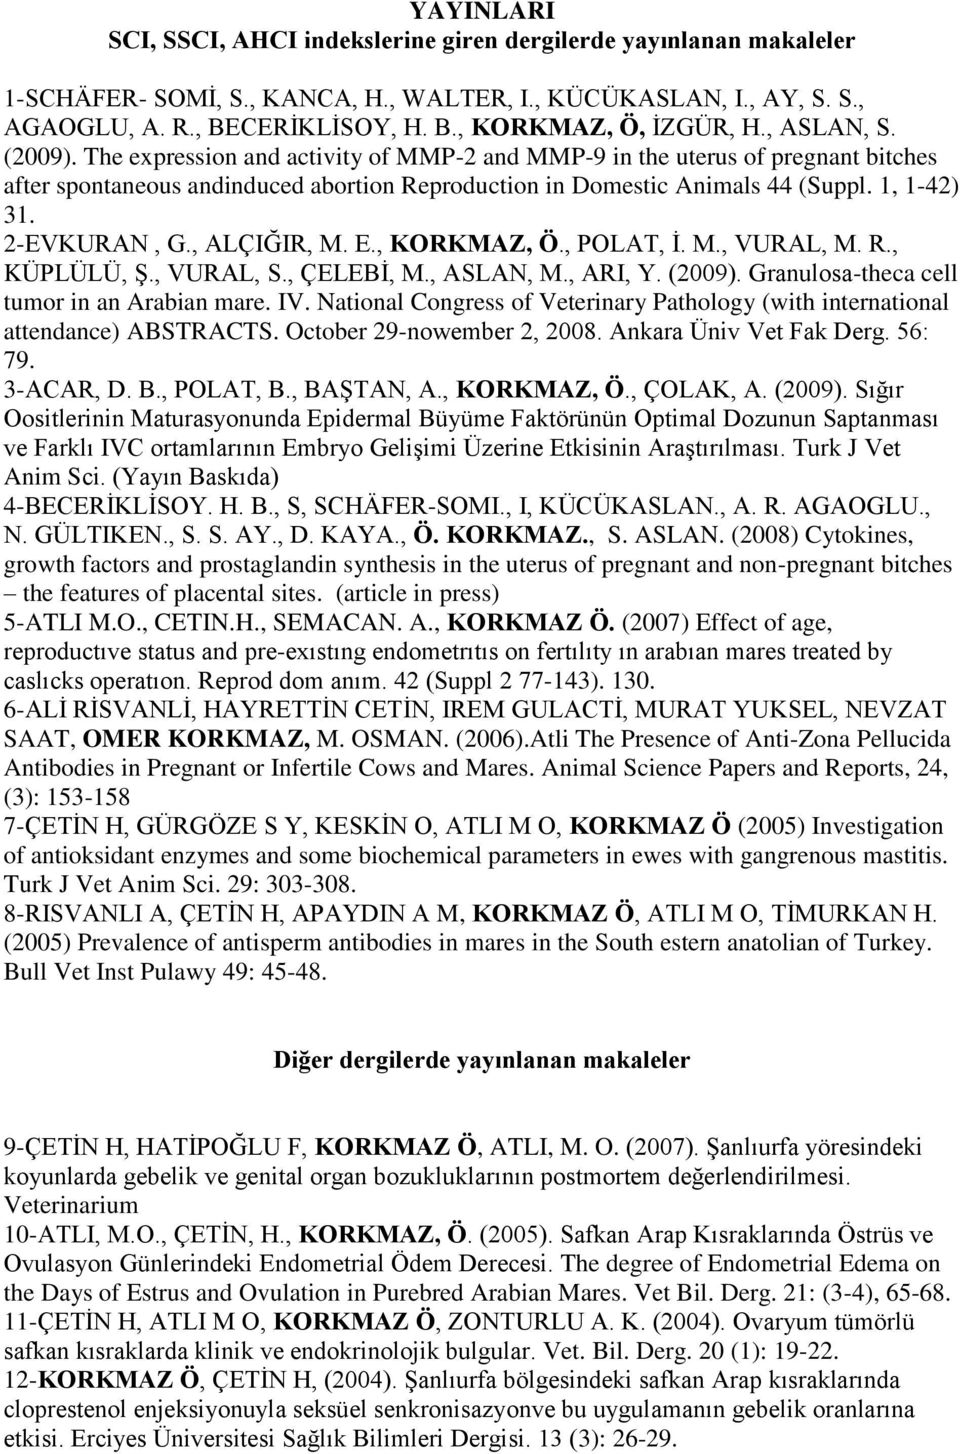 2-EVKURAN, G., ALÇIĞIR, M. E., KORKMAZ, Ö., POLAT, İ. M., VURAL, M. R., KÜPLÜLÜ, Ş., VURAL, S., ÇELEBİ, M., ASLAN, M., ARI, Y. (2009). Granulosa-theca cell tumor in an Arabian mare. IV.